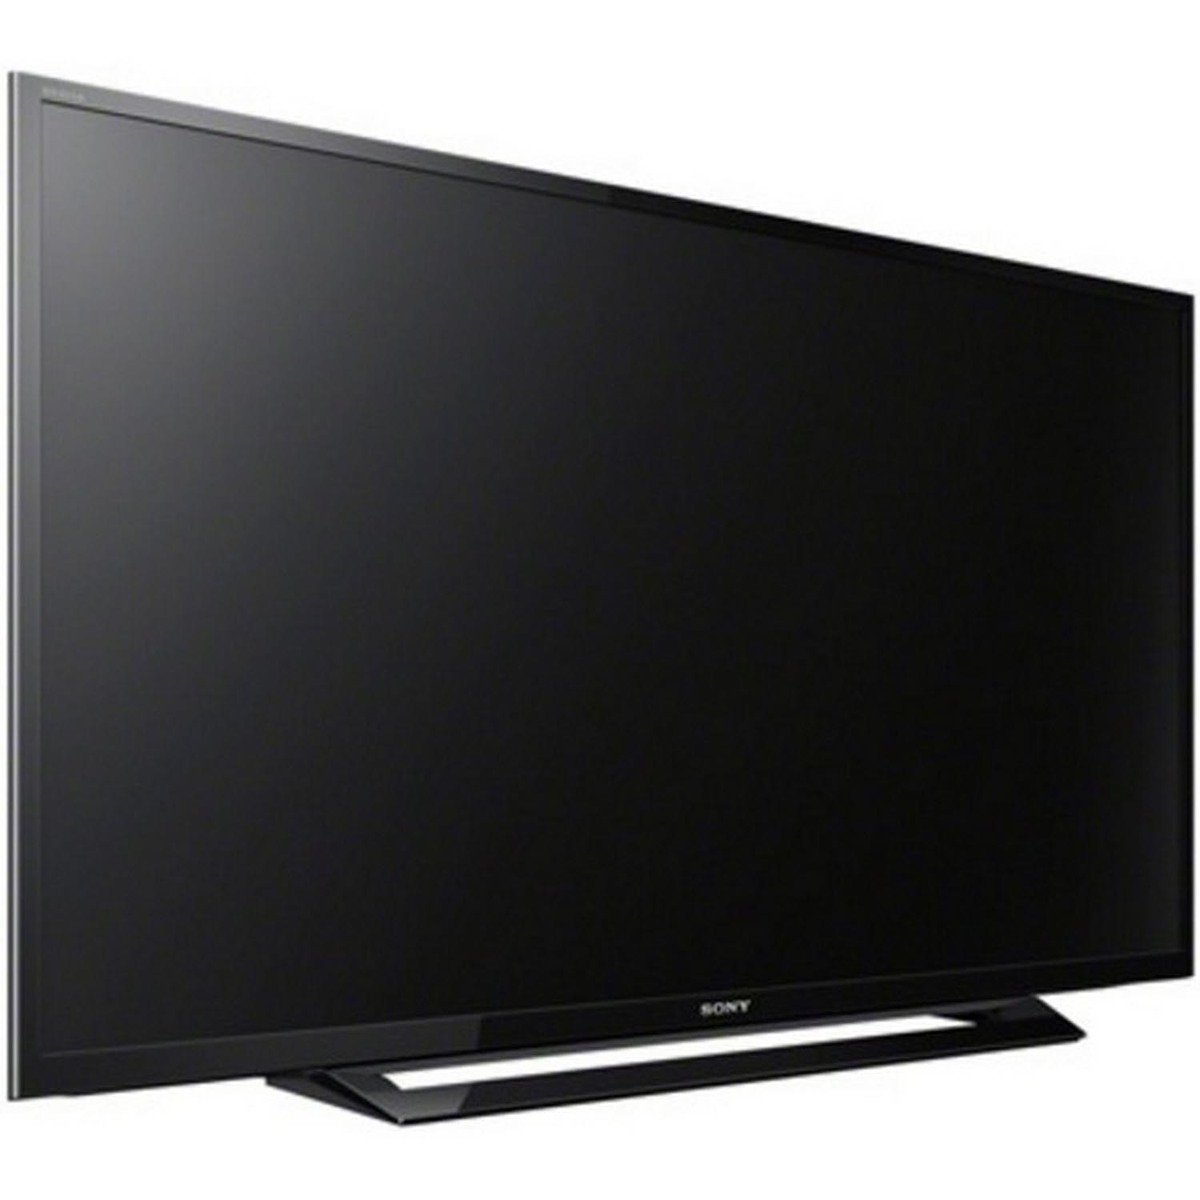 Sony HD Ready LED TV KDL-32R324E 32inch